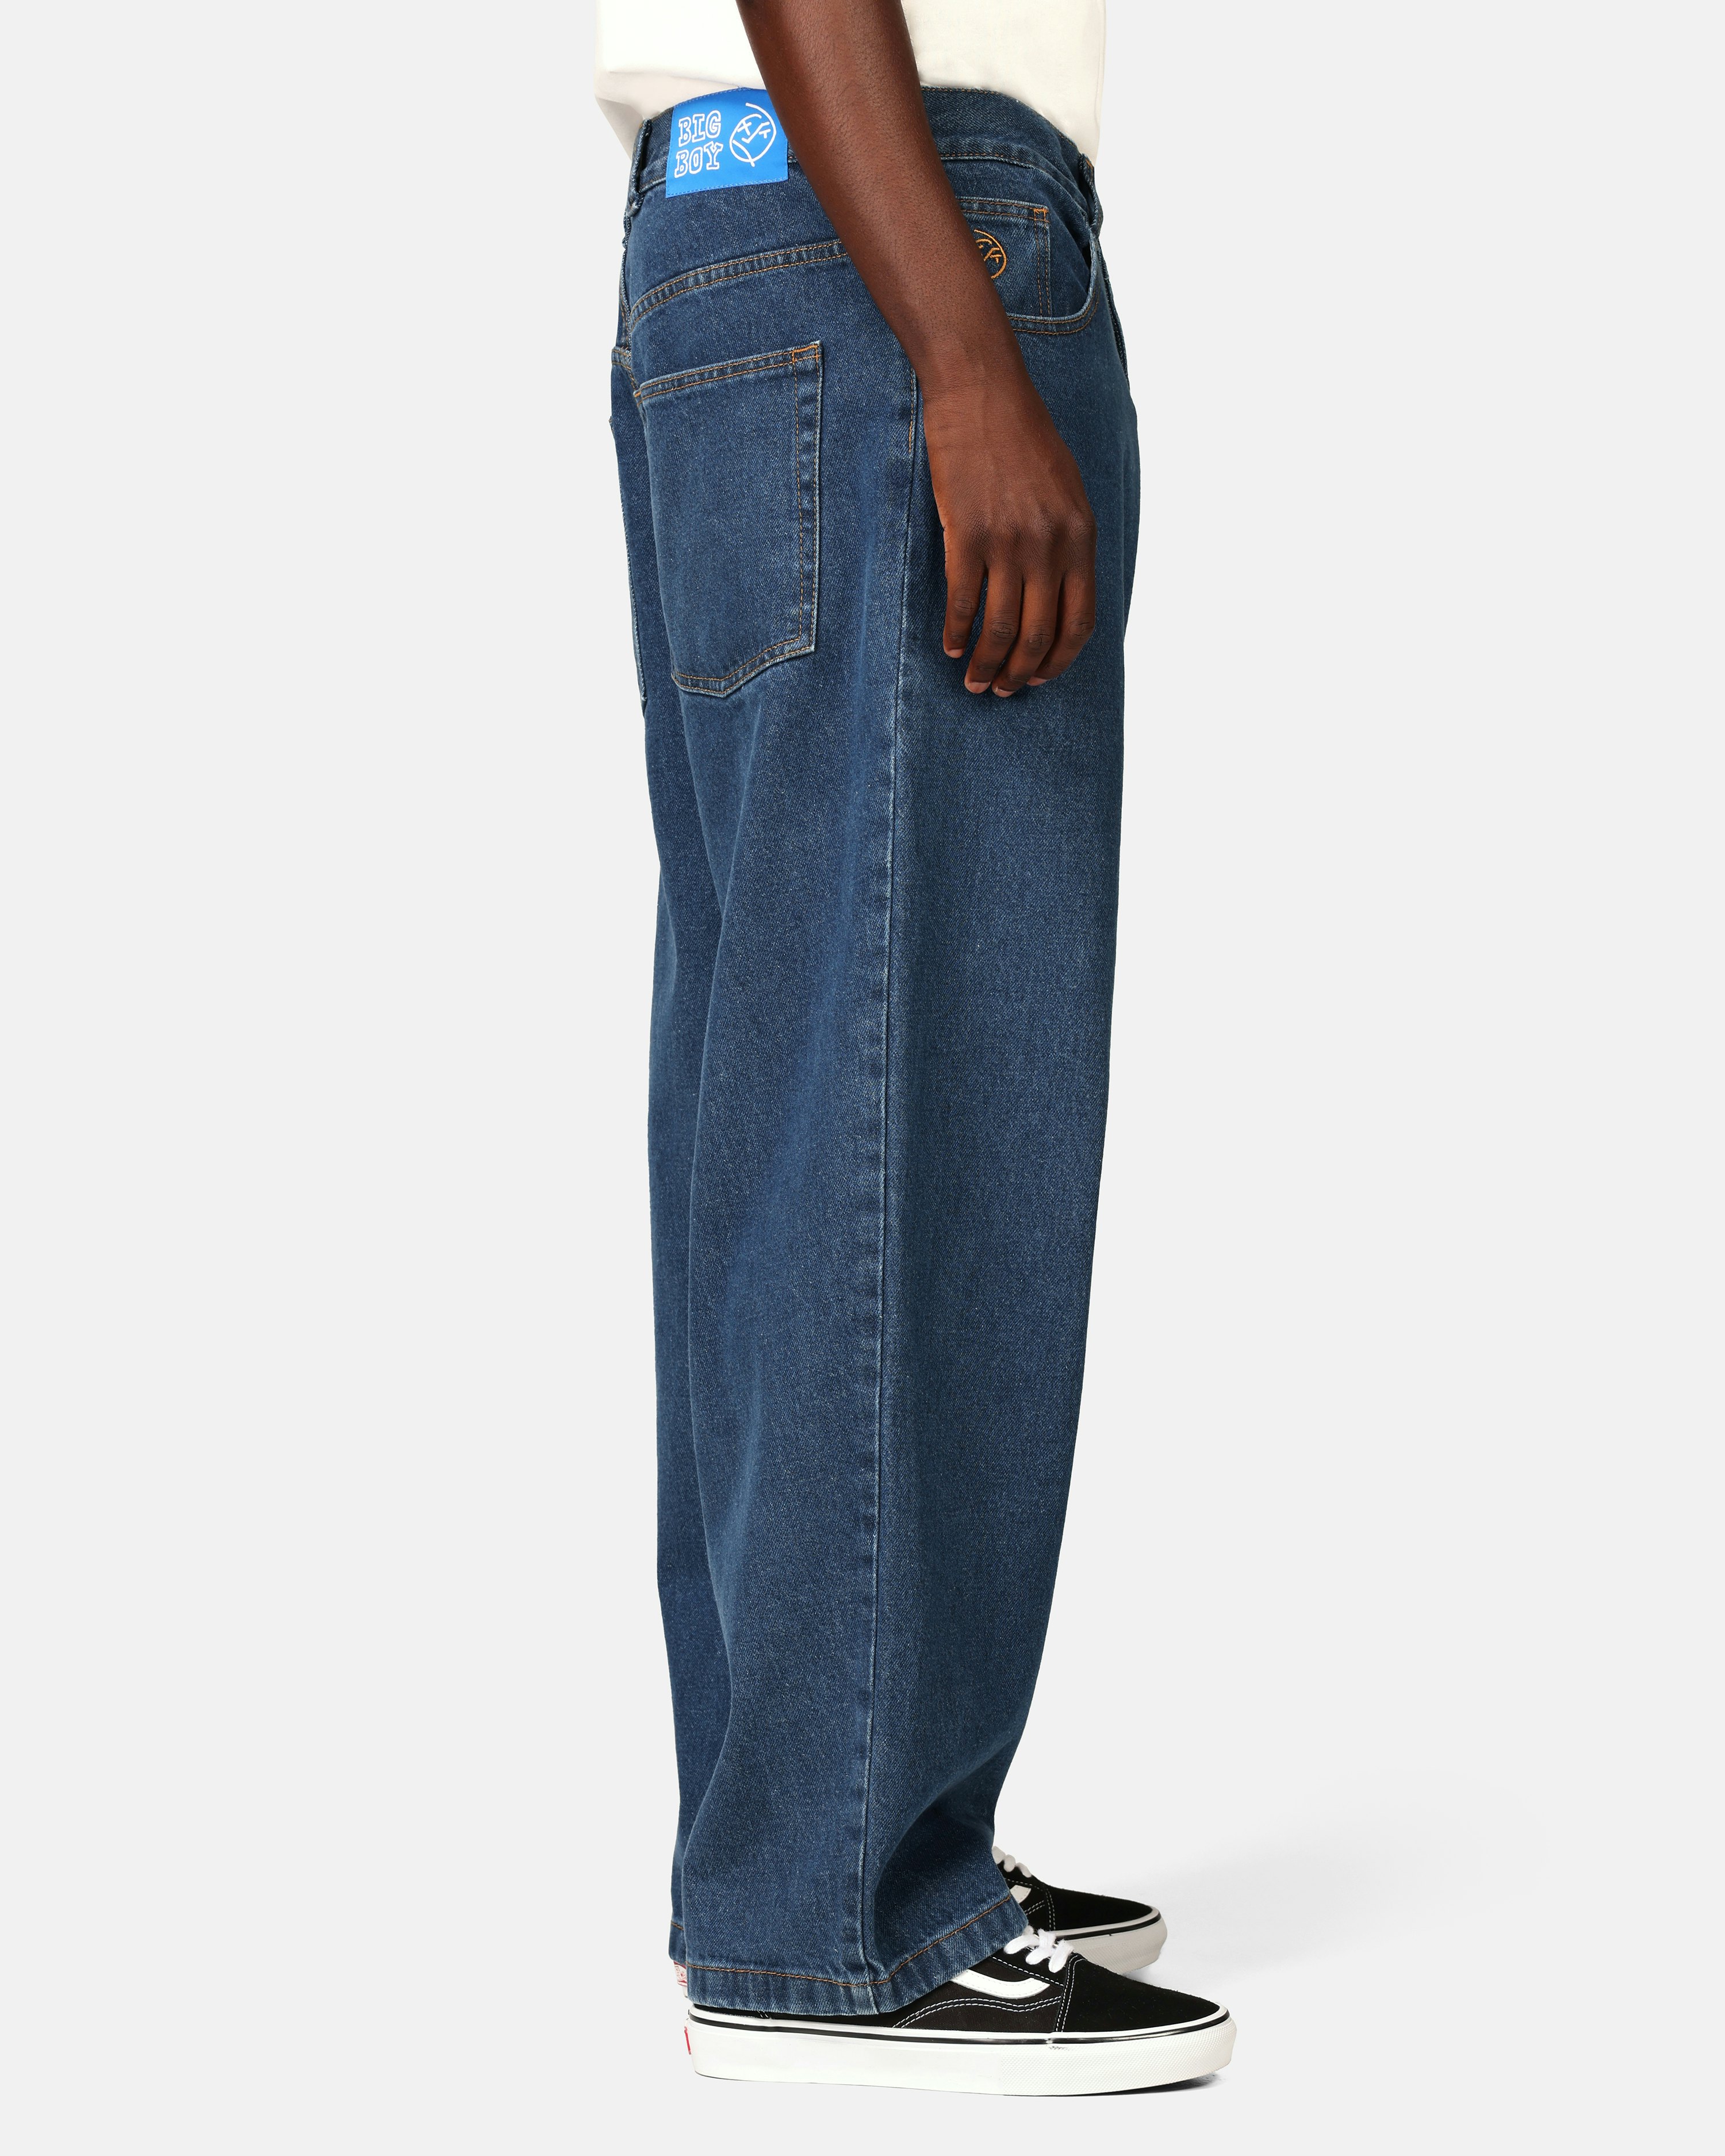 Polar Skate Co. Jeans - Big Boy Blue | Unisex | Junkyard